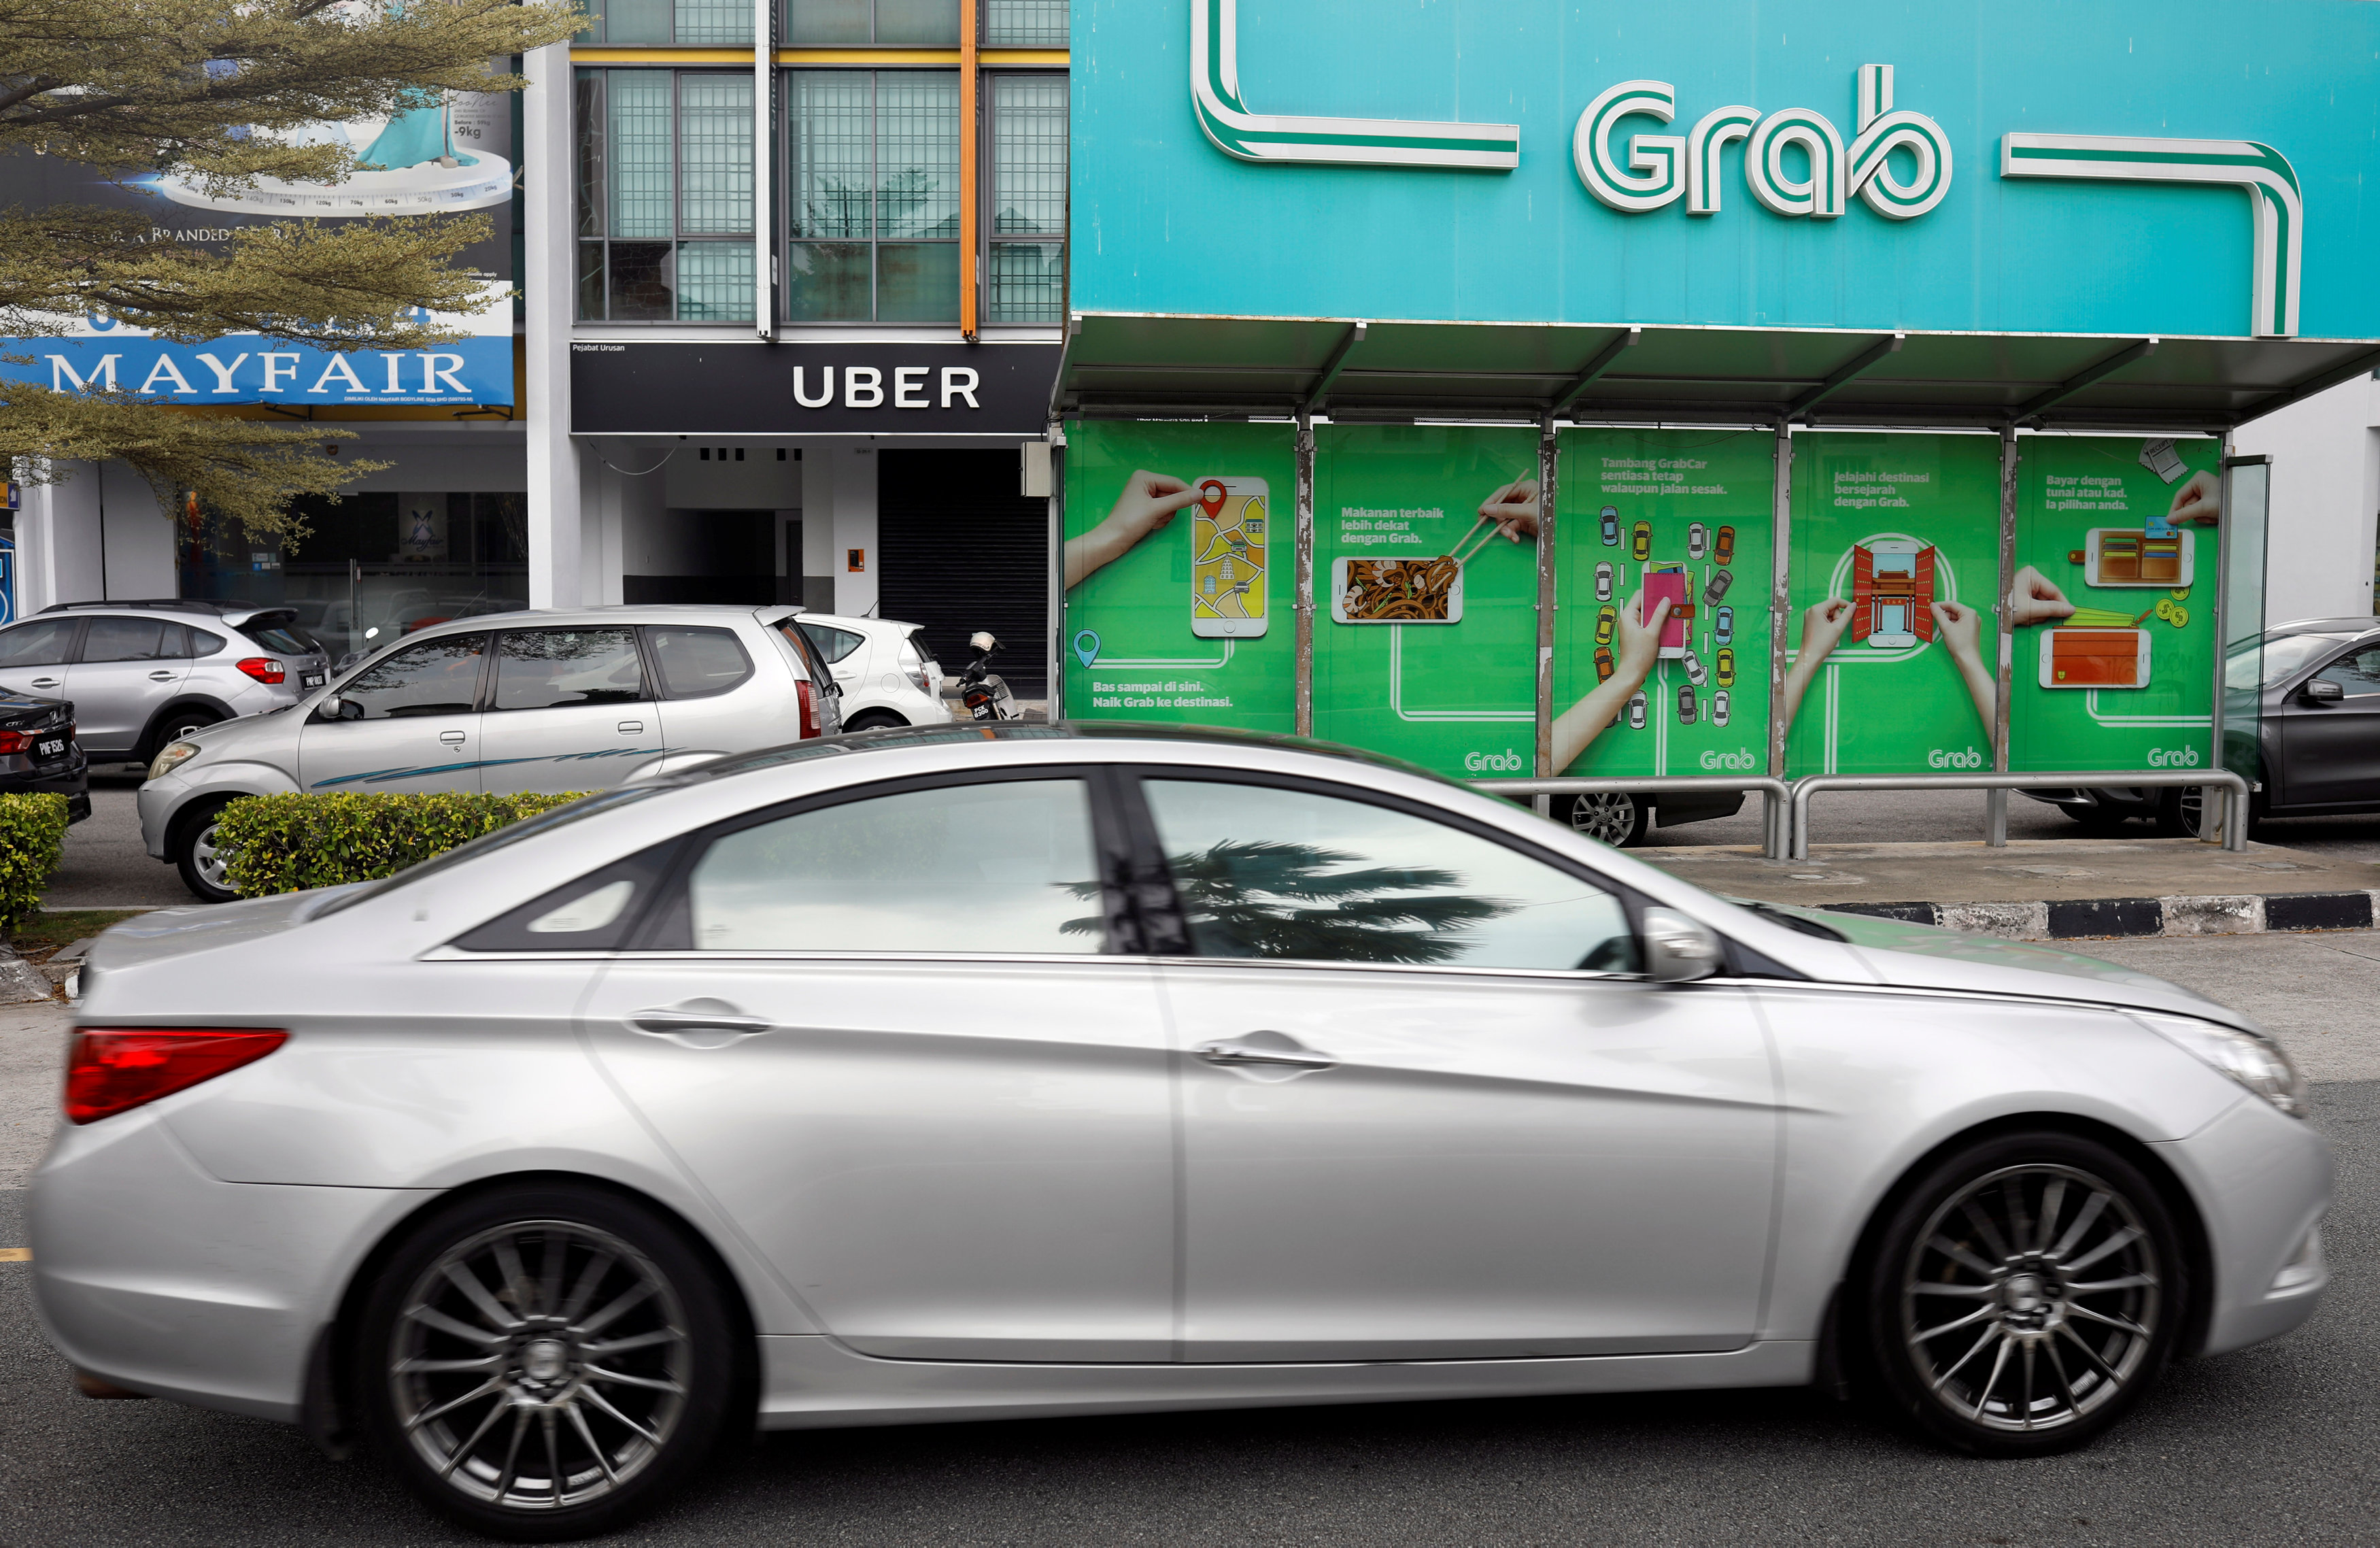 Grab 將成為阿里巴巴投資東南亞的新目標。（路透圖片）